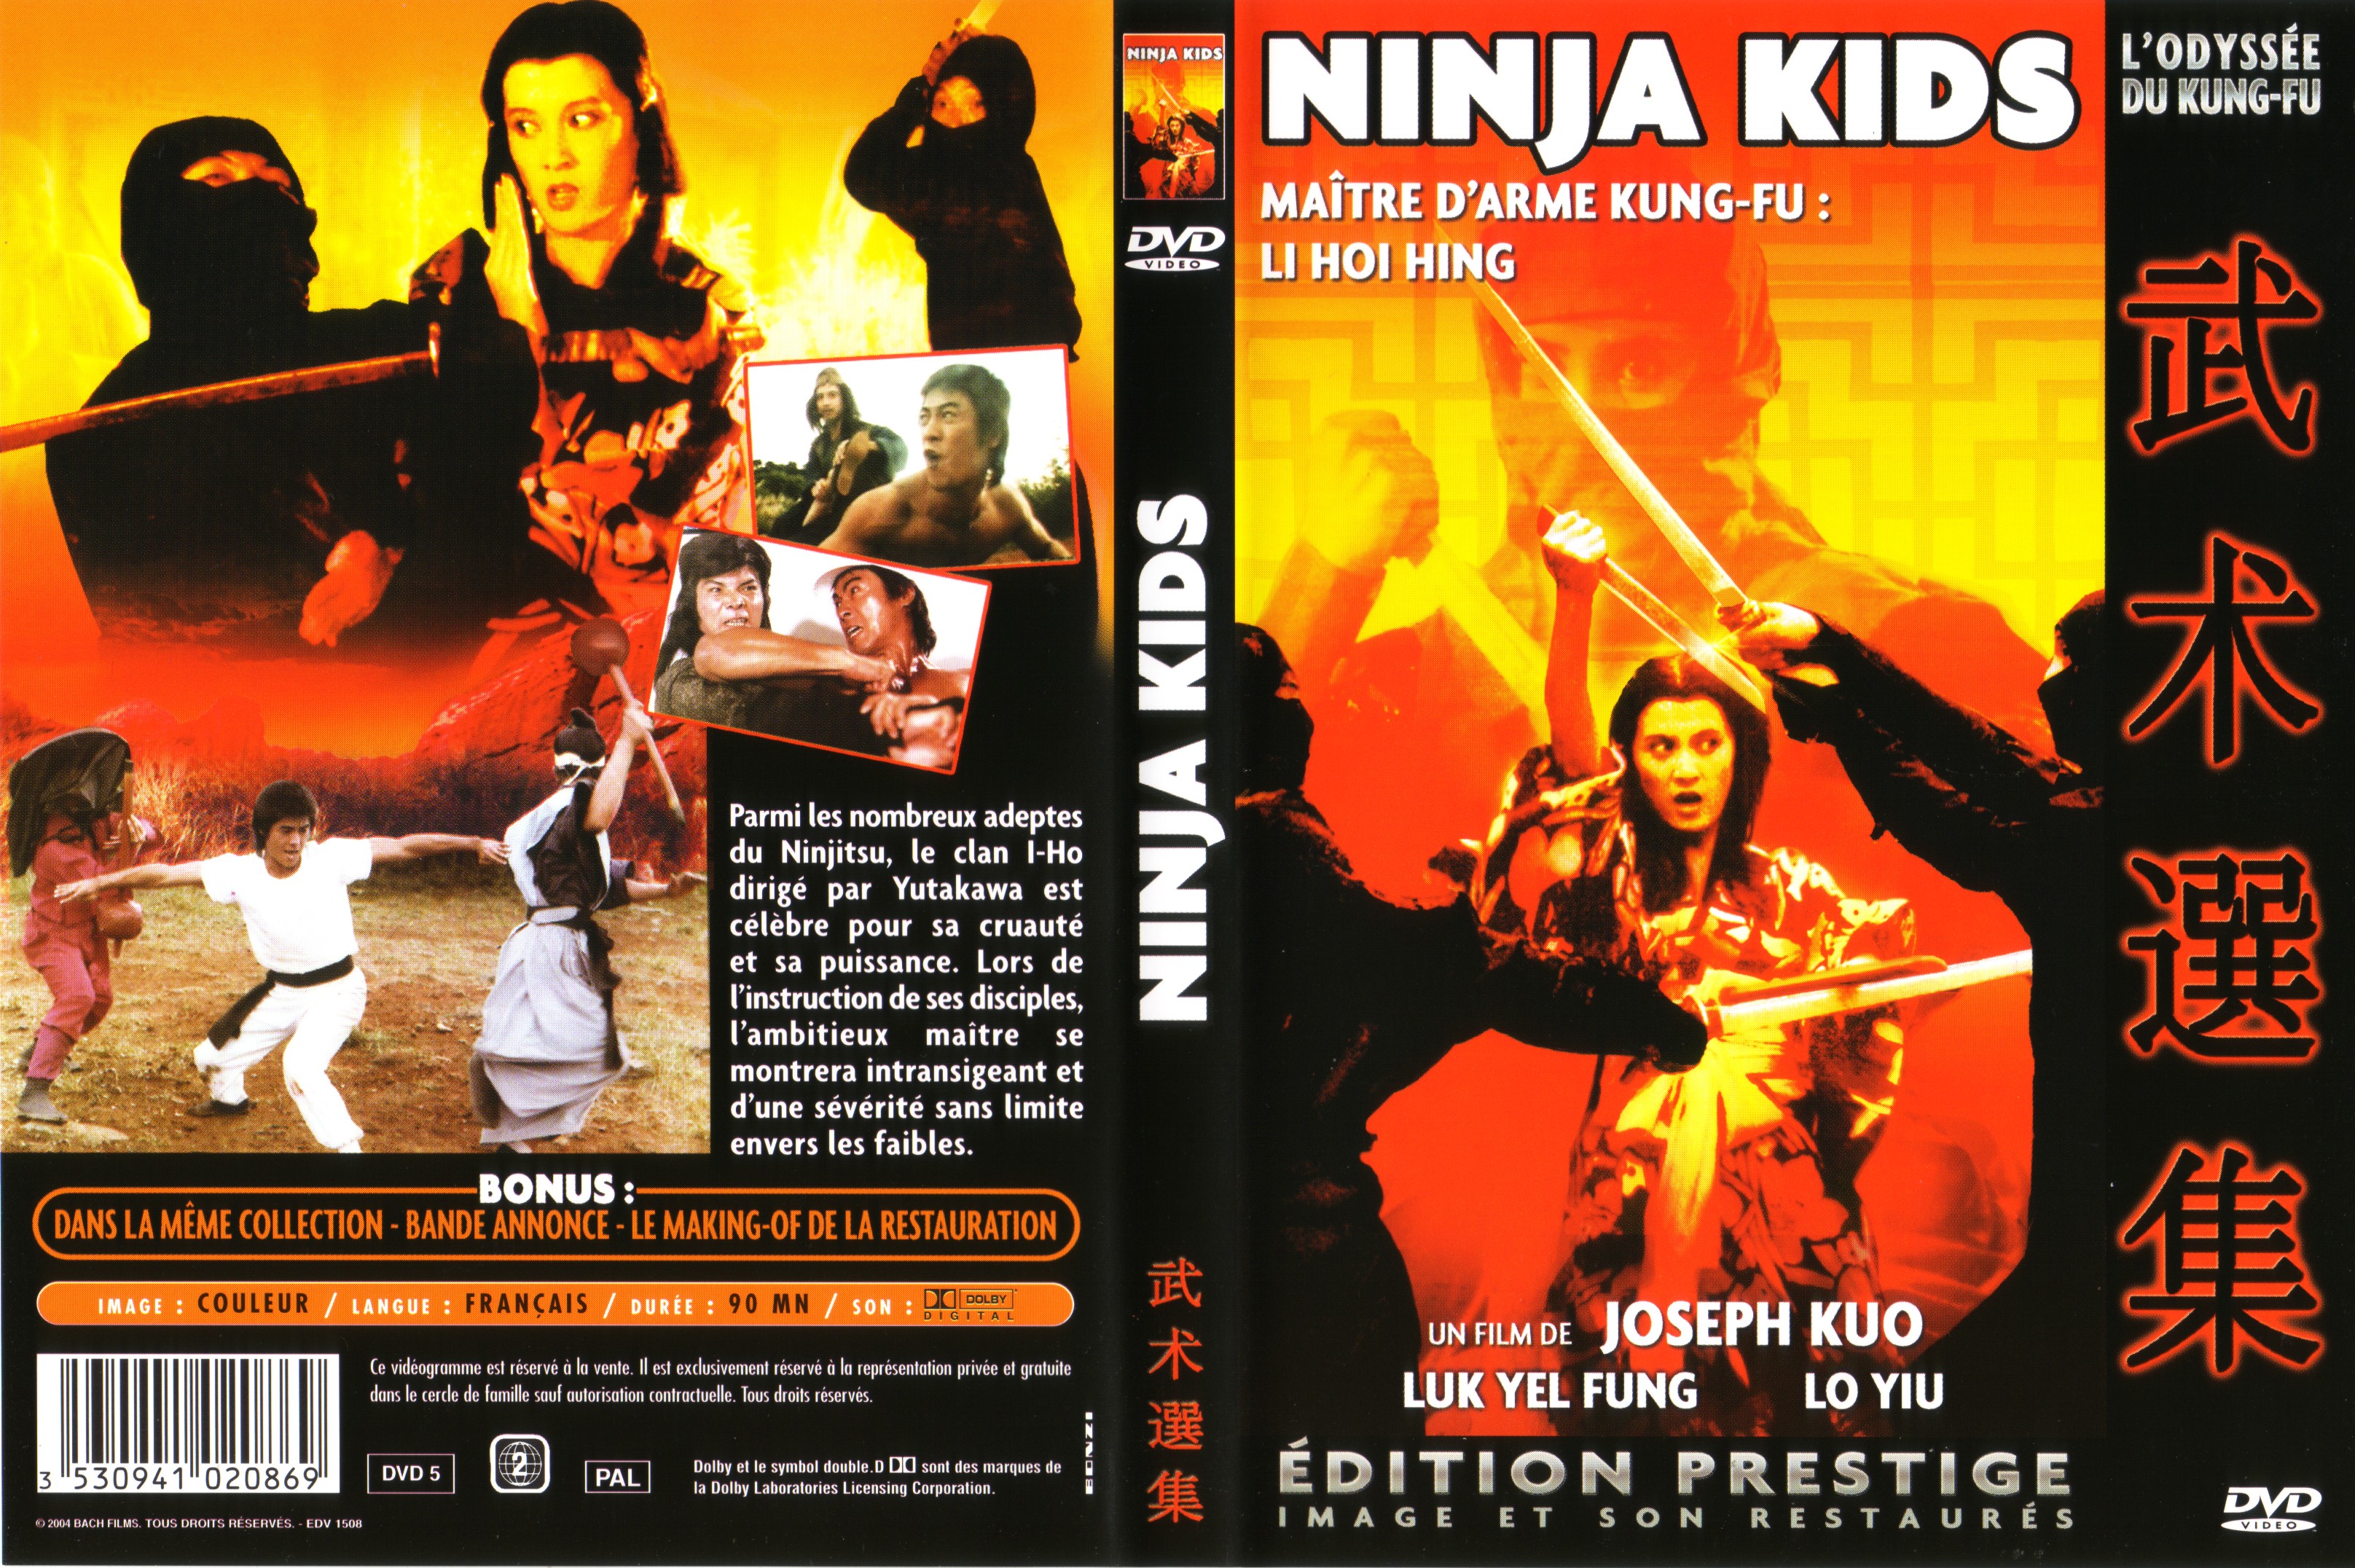 Jaquette DVD Ninja kids